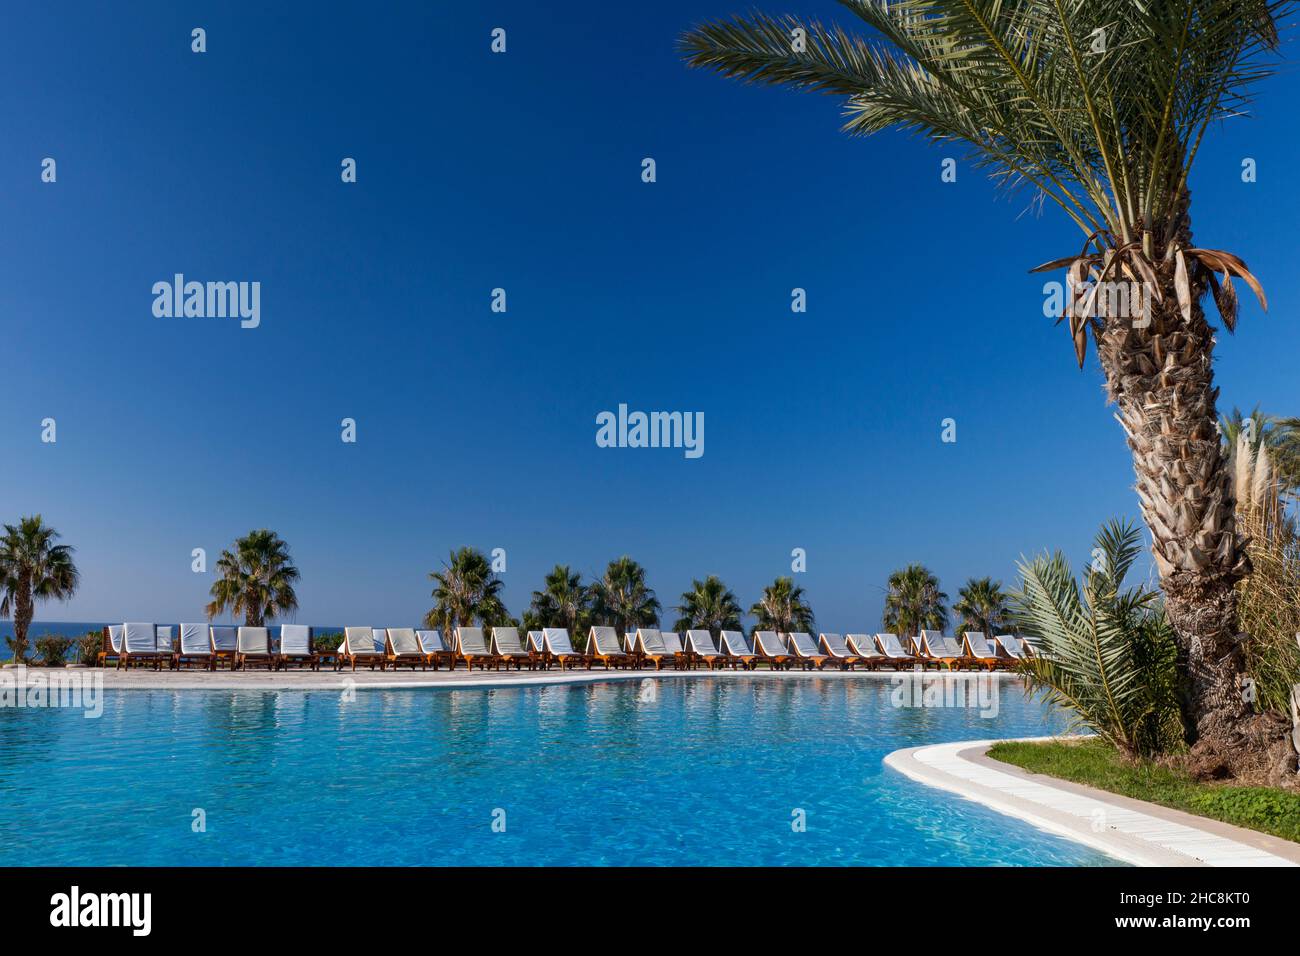 Hotel-Swimmingpool mit Palmen, Insel Zypern, östliches Mittelmeer Stockfoto